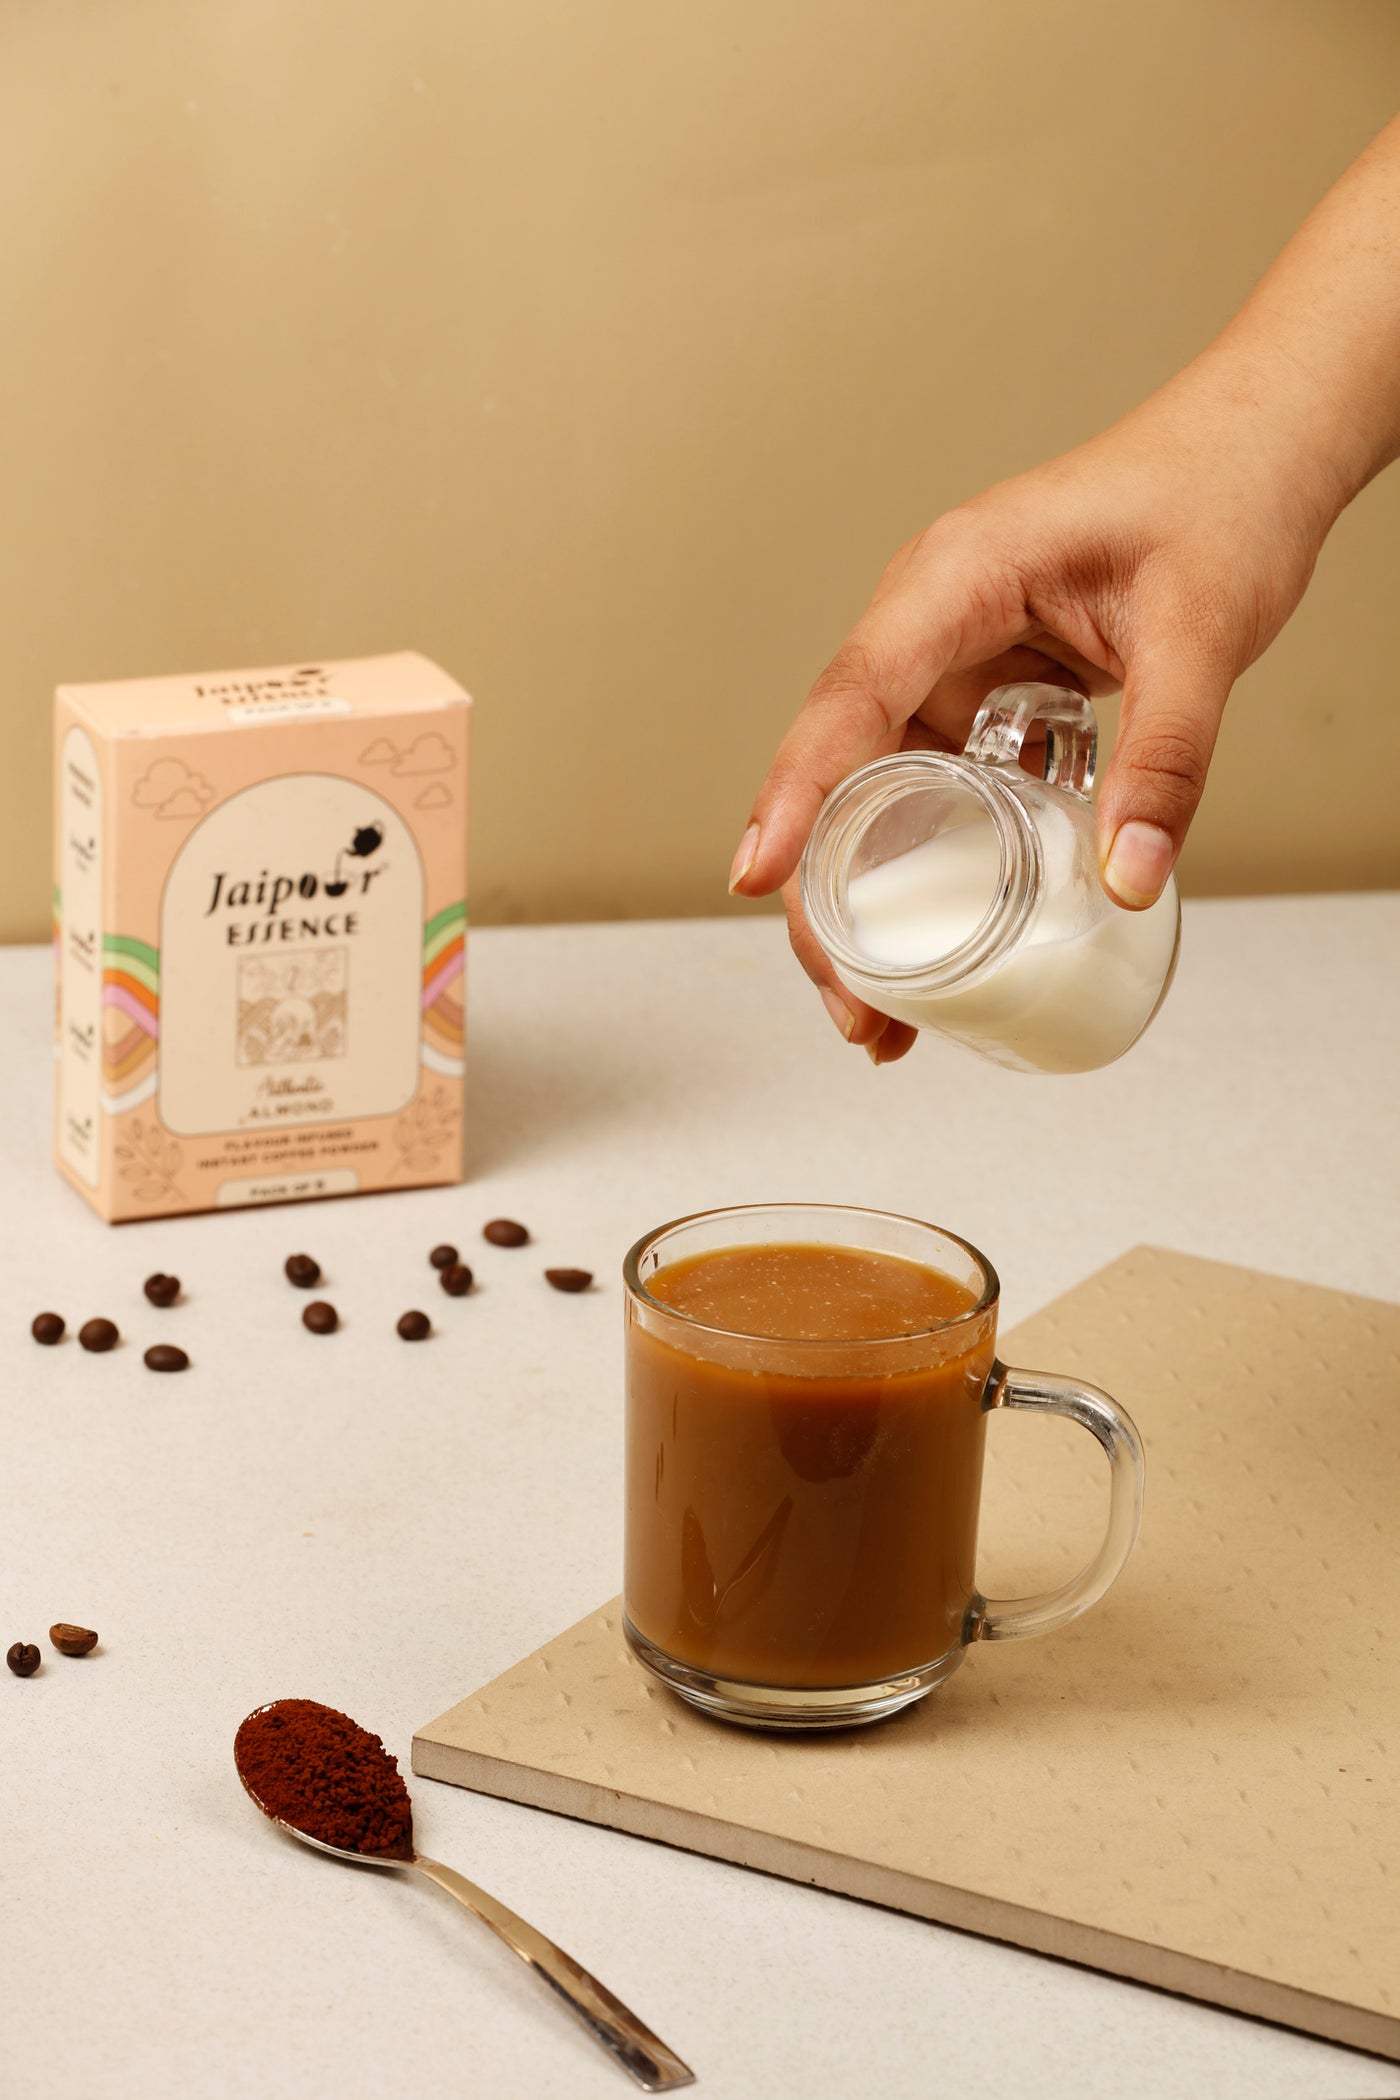 Hazelnut Flavoured Instant Coffee Powder | Pack Of 5 Sachet